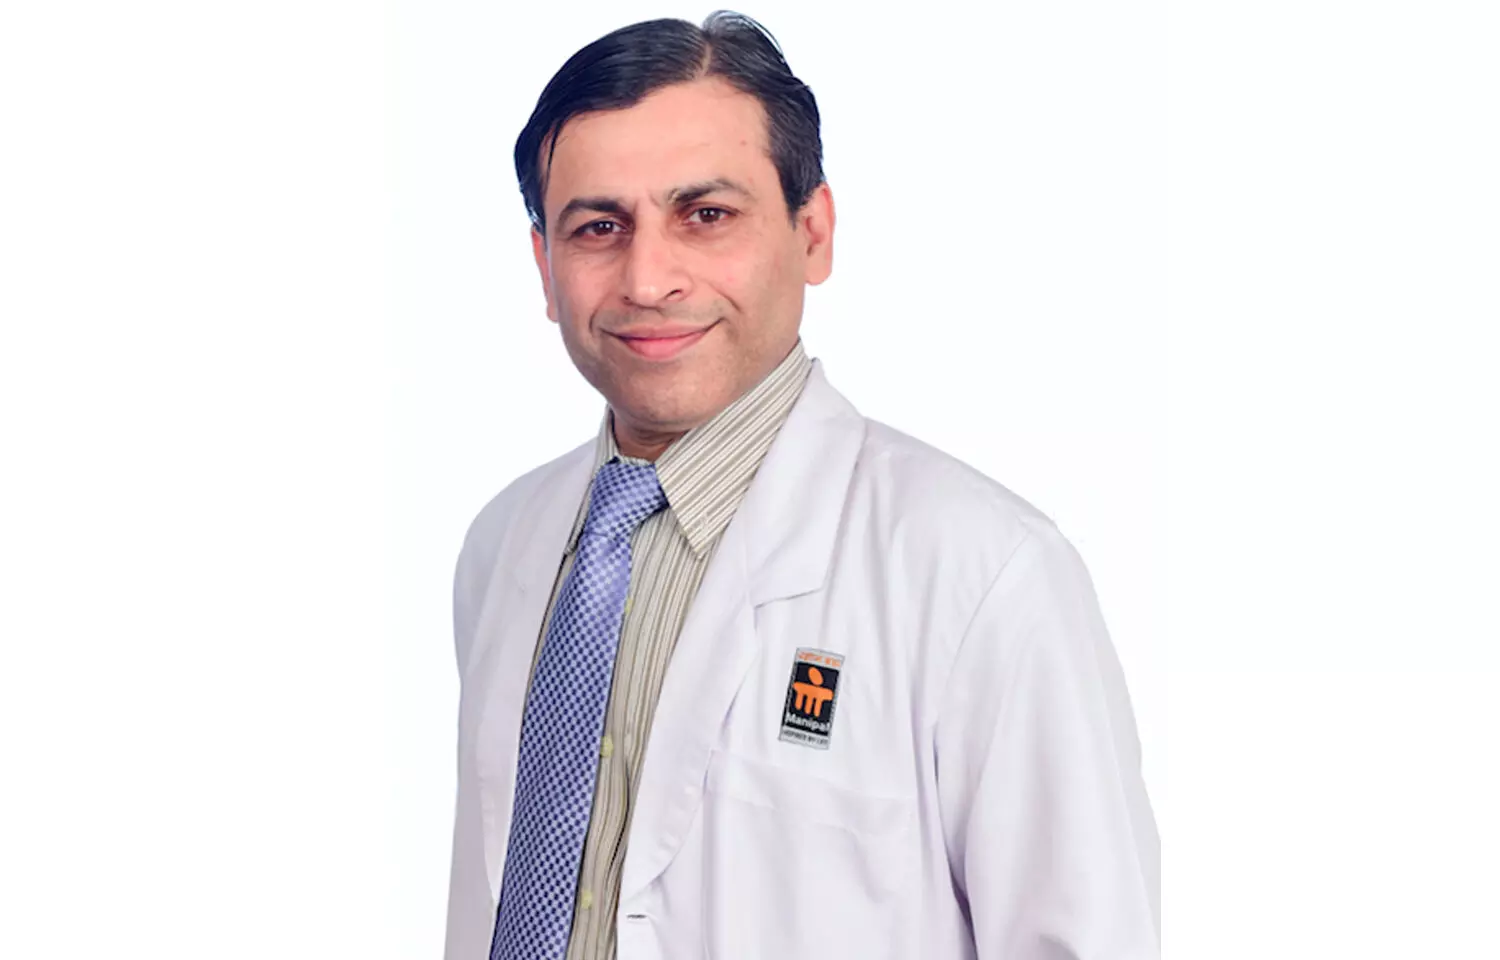 HoD of Urology, KMC Hospital Elected Secretary of Urological Society of India